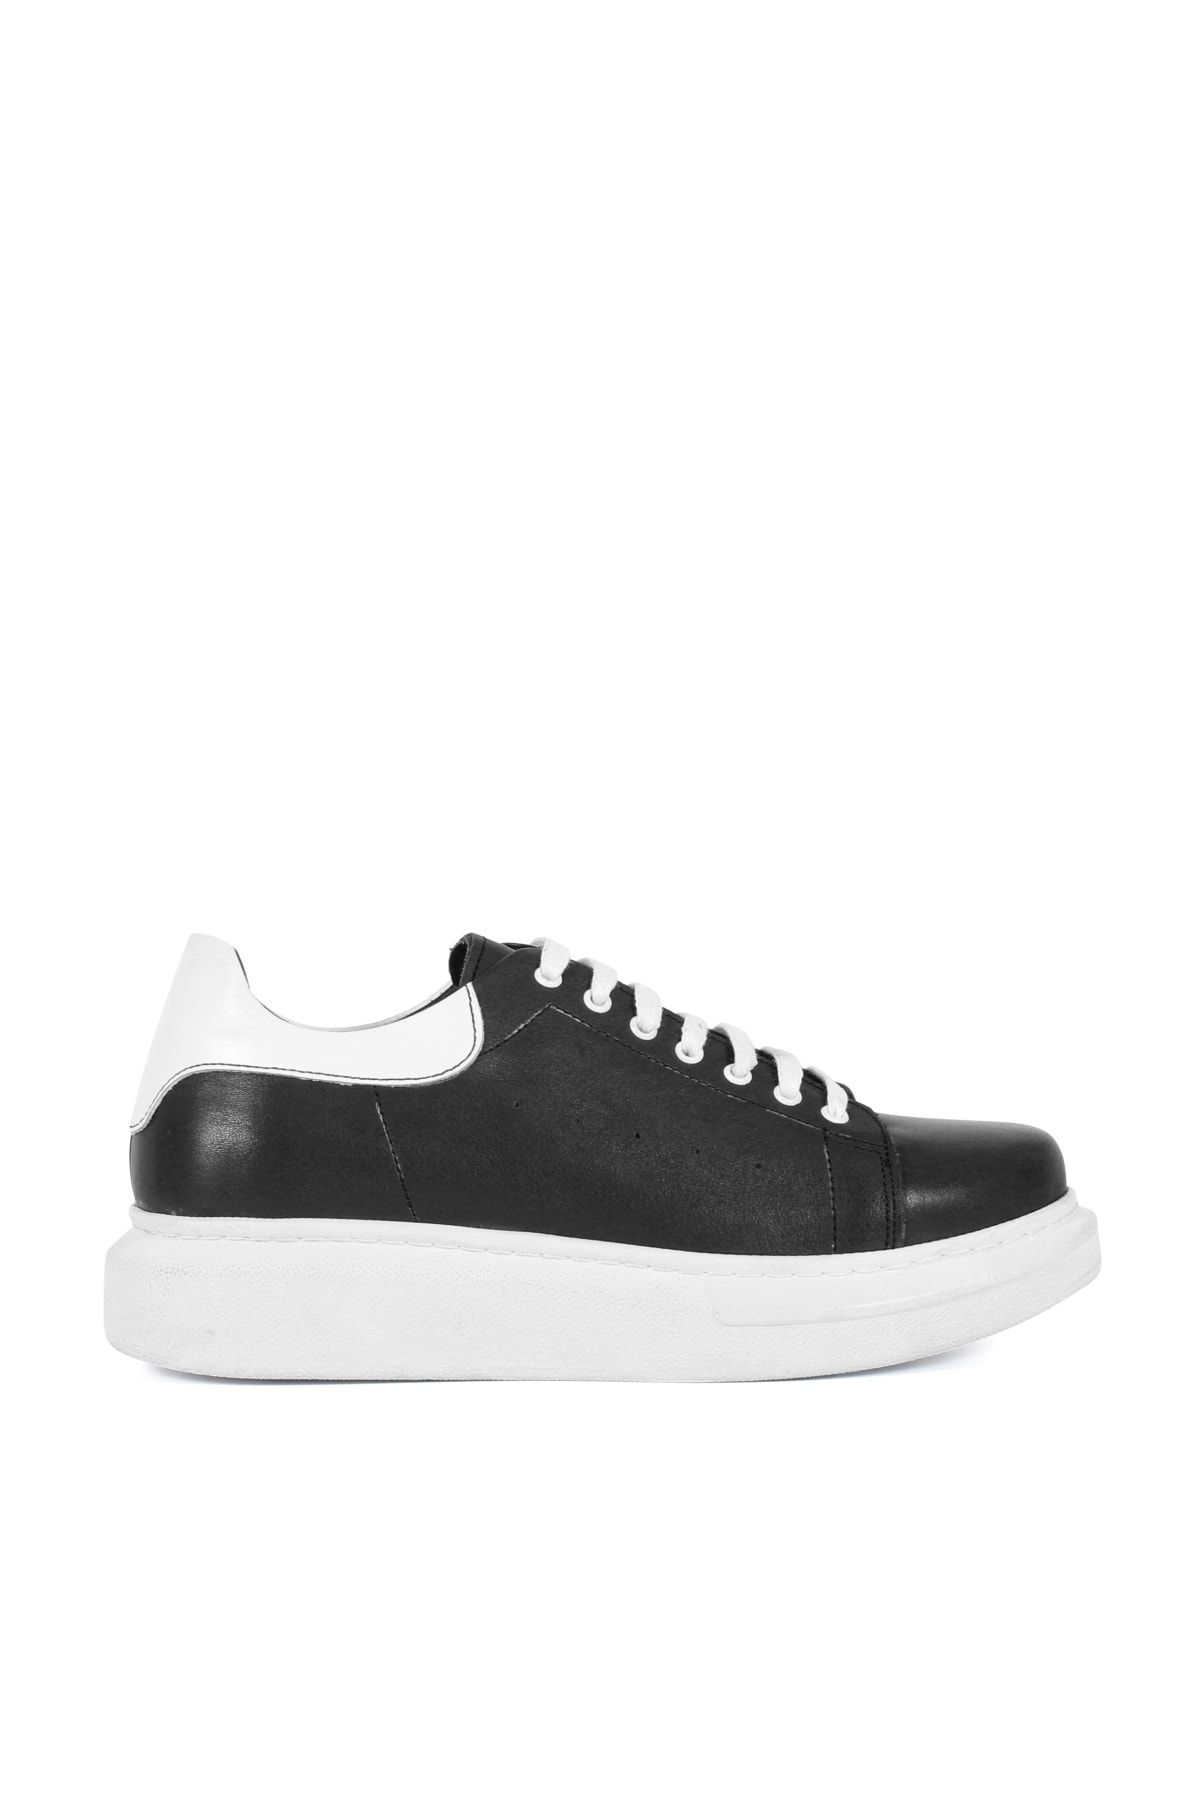 Geppetto Sneaker Hakiki Deri Spor Ayakkabı Siyah Beyaz